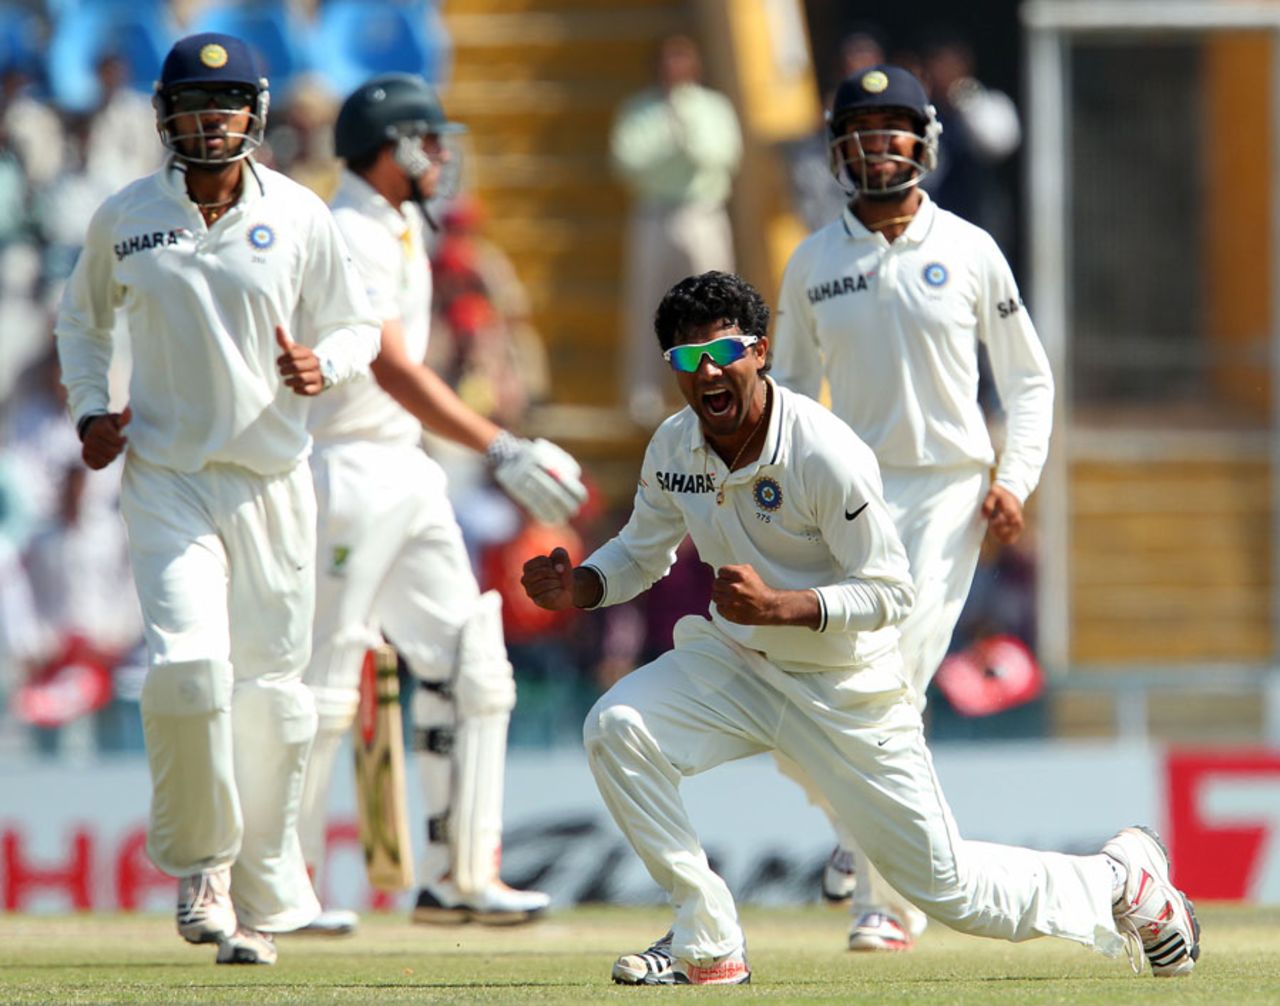 Ravindra Jadeja celebrates after taking a return catch to dismiss Moises Henriques, India v Australia, 3rd Test, 5th day, Mohali, March 18, 2013